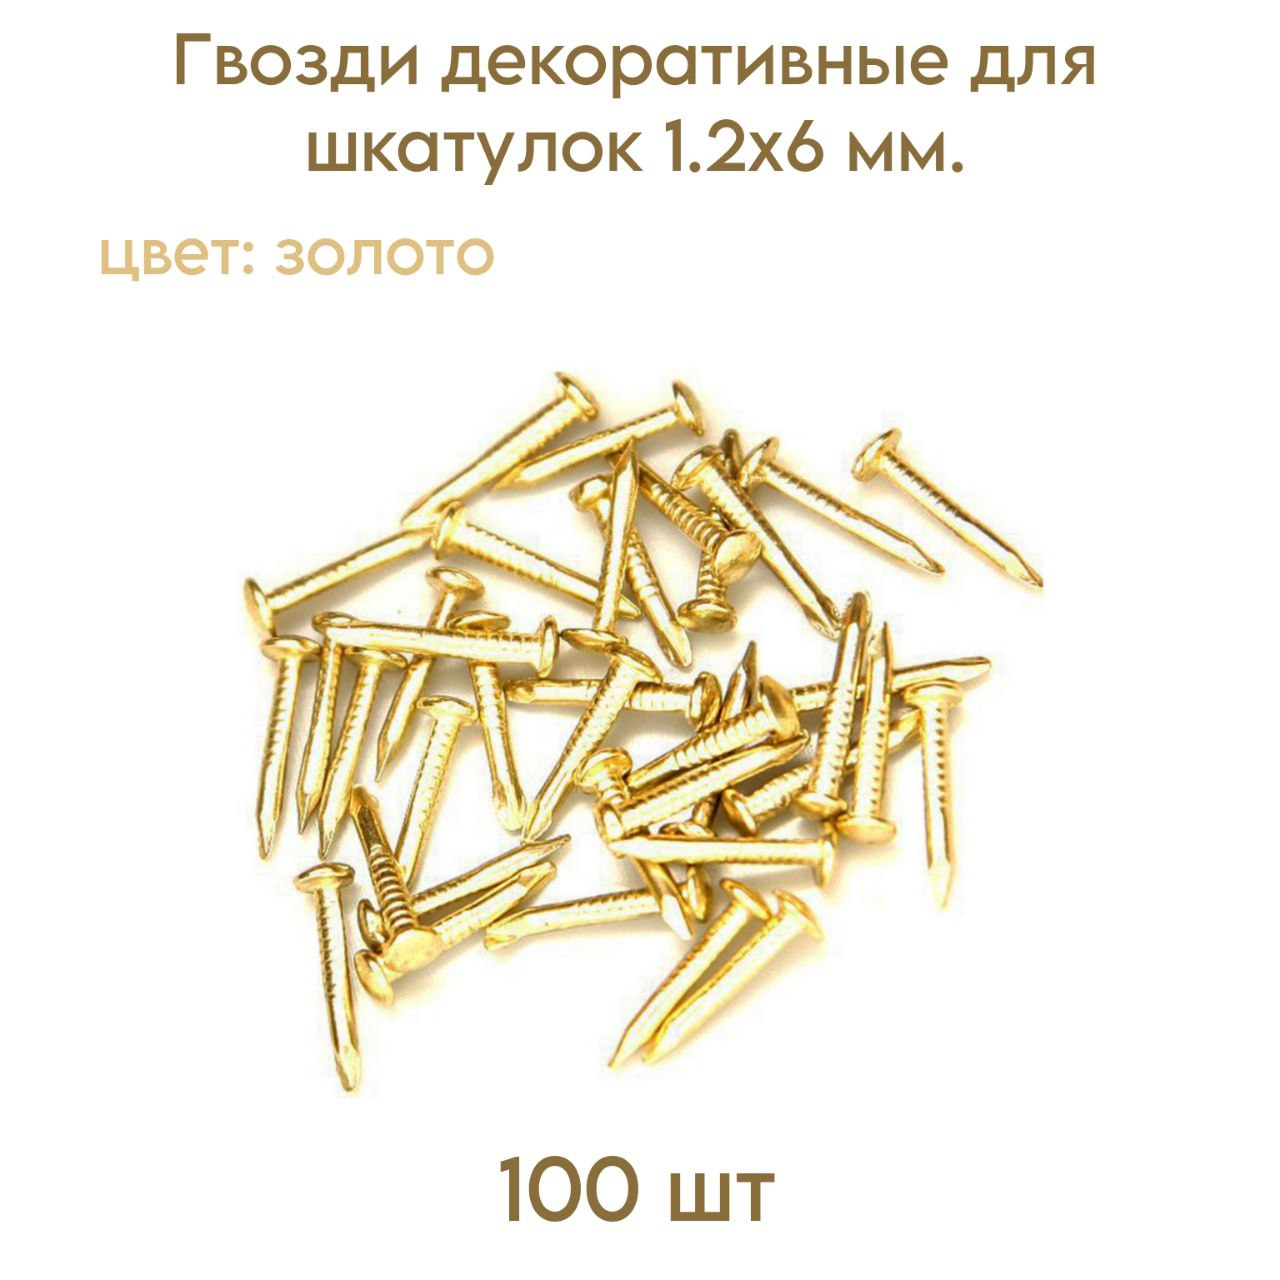 Гвозди LIVGARD декоративные для шкатулок, золото, 1.2х6 мм 100 шт